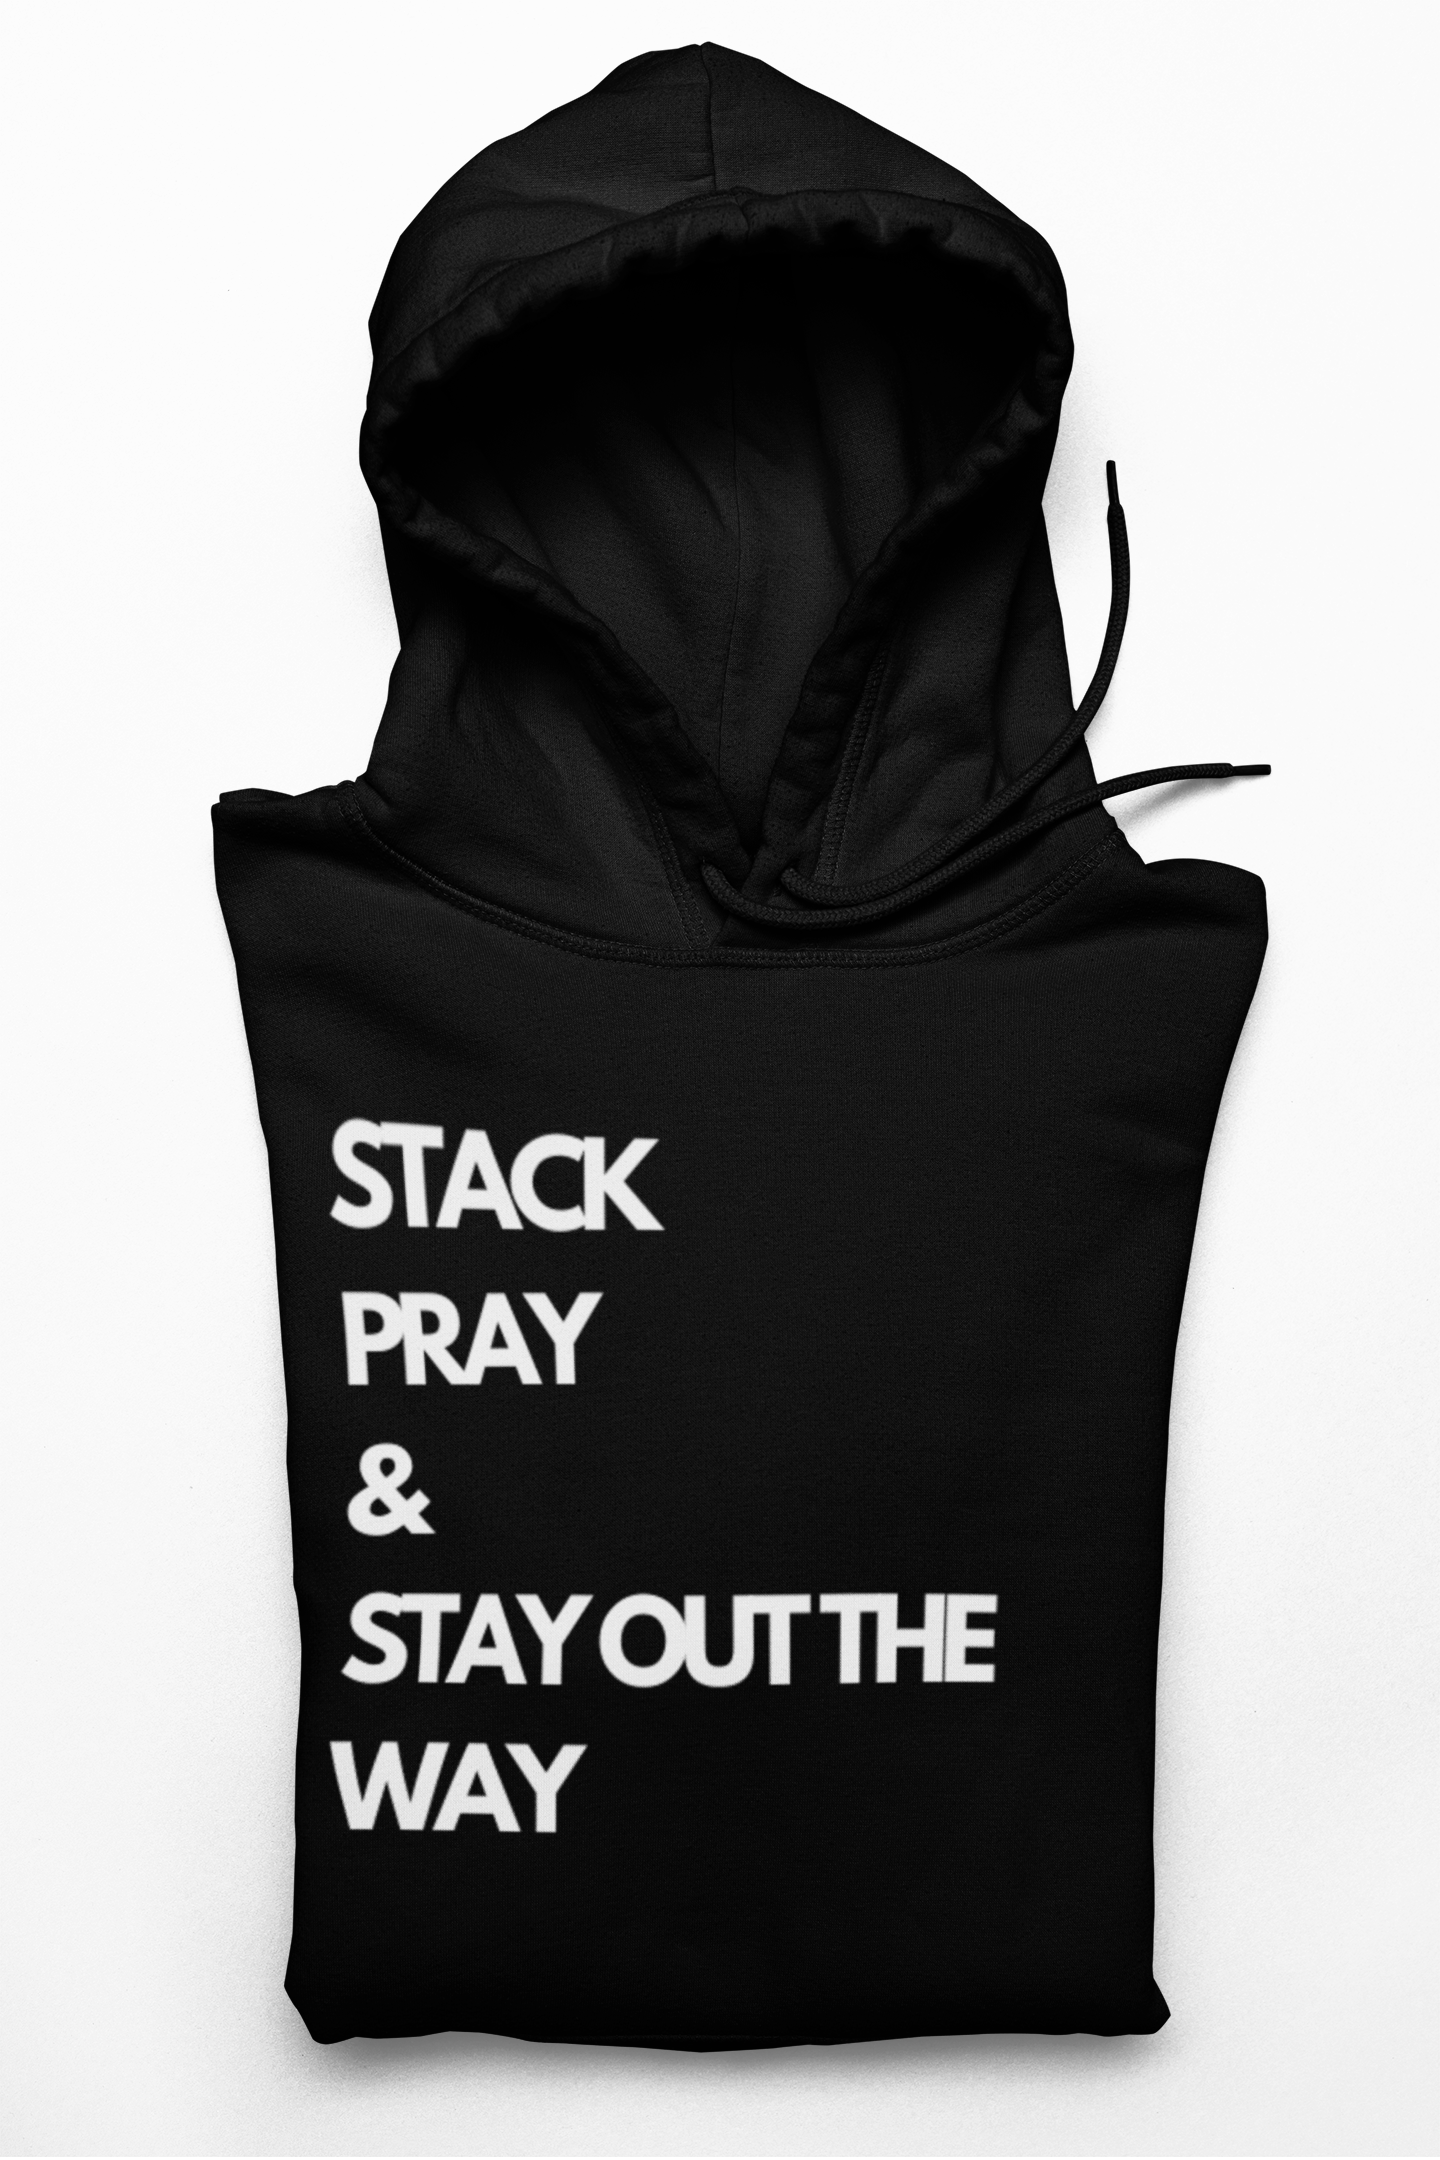 STACK, PRAY AND...